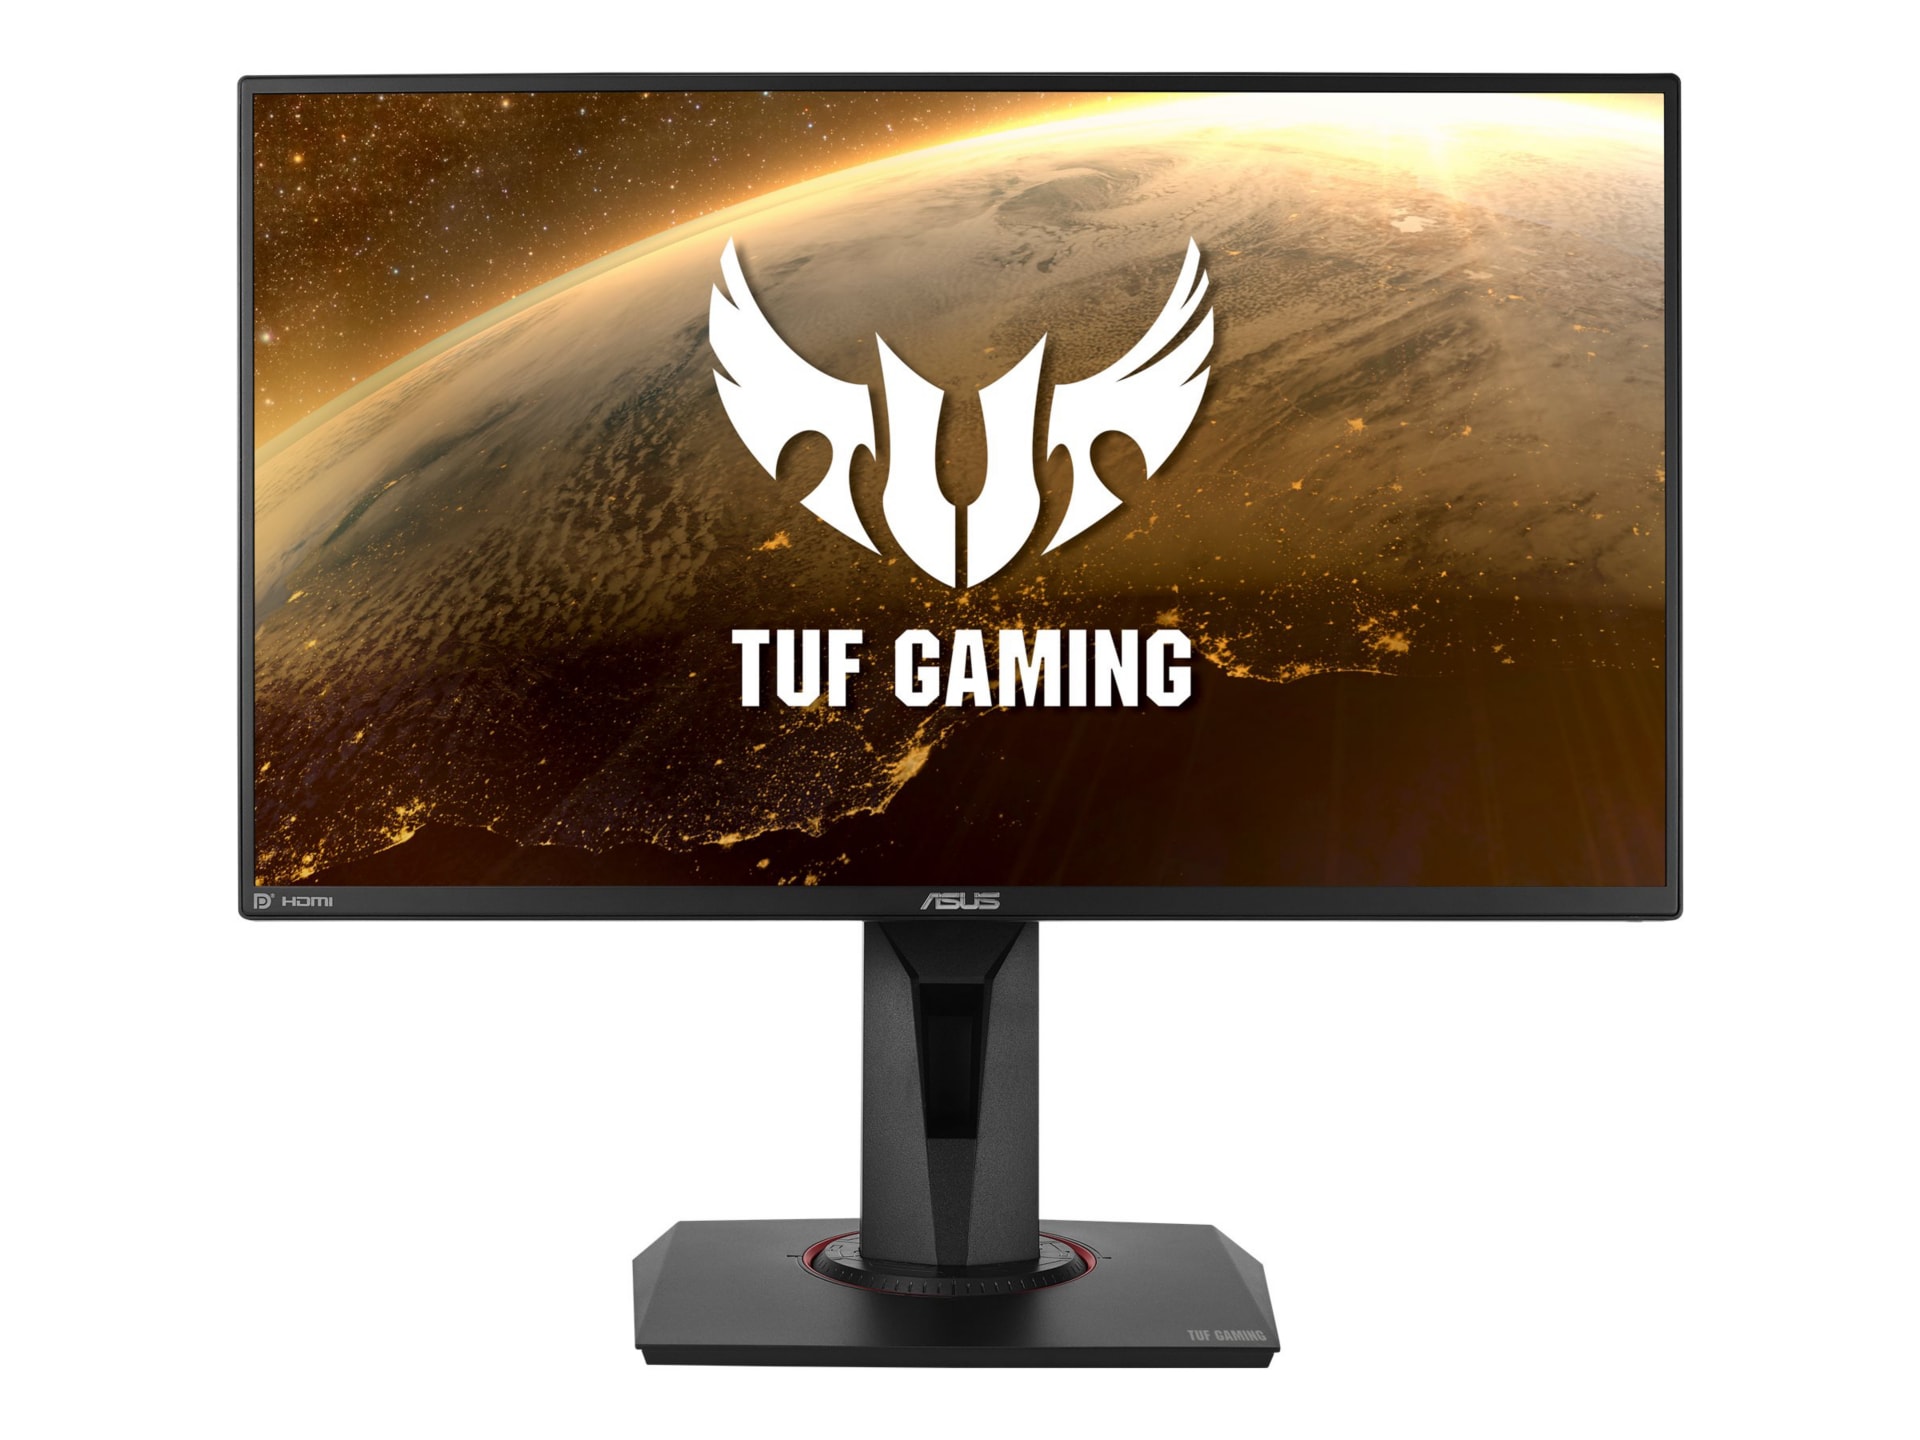 ASUS TUF Gaming VG259QR - LED monitor - Full HD (1080p) - 24.5"